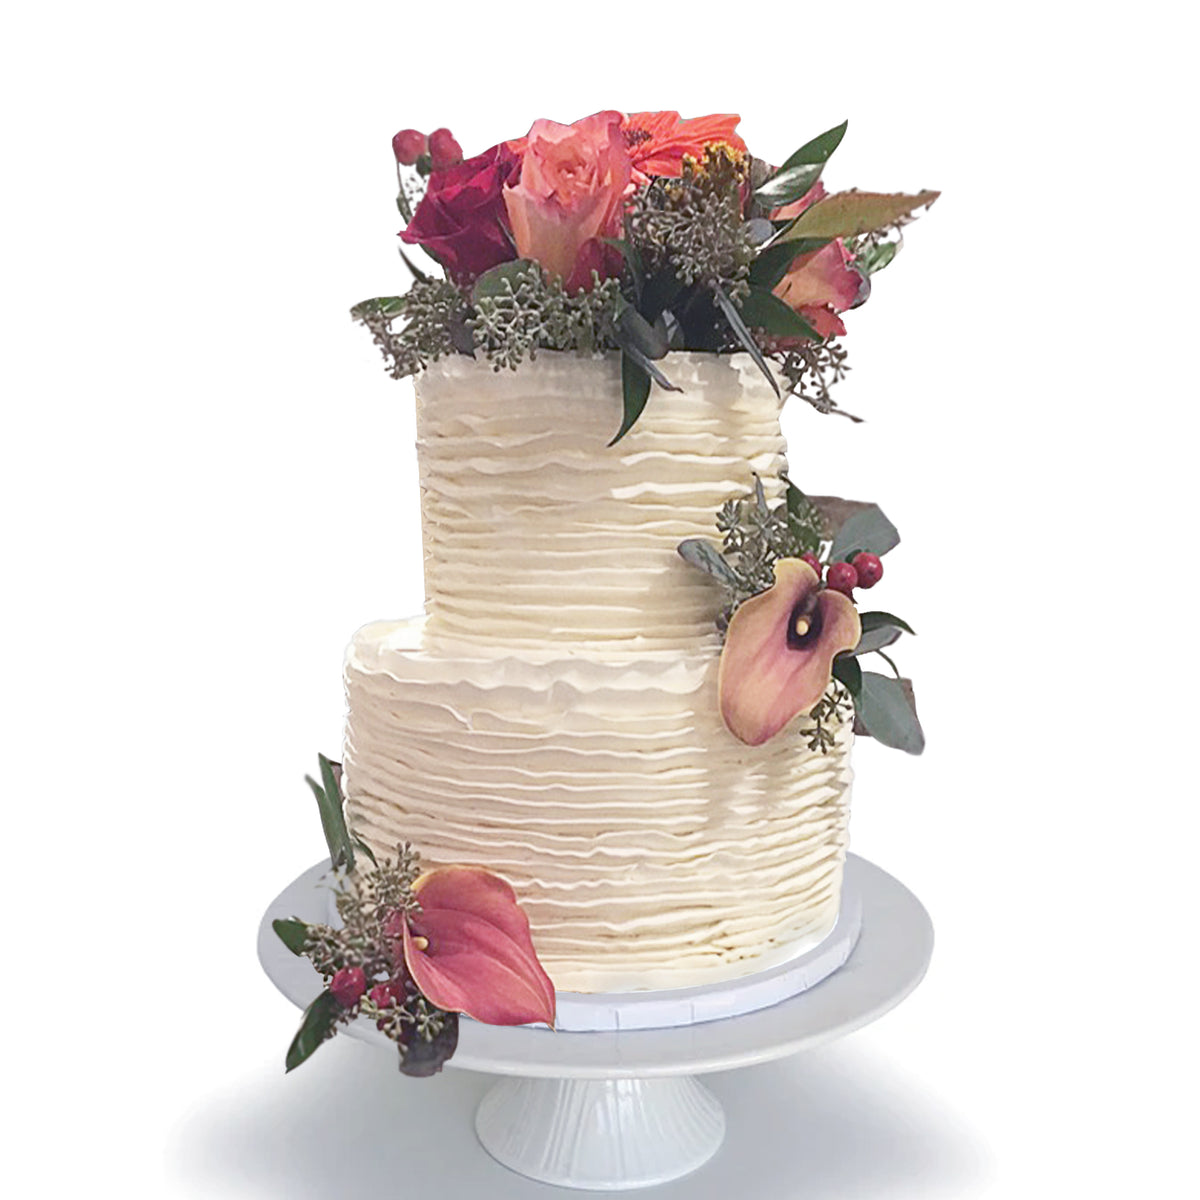 45 + The Most Creative Wedding Cake Designs - Ruffle cake